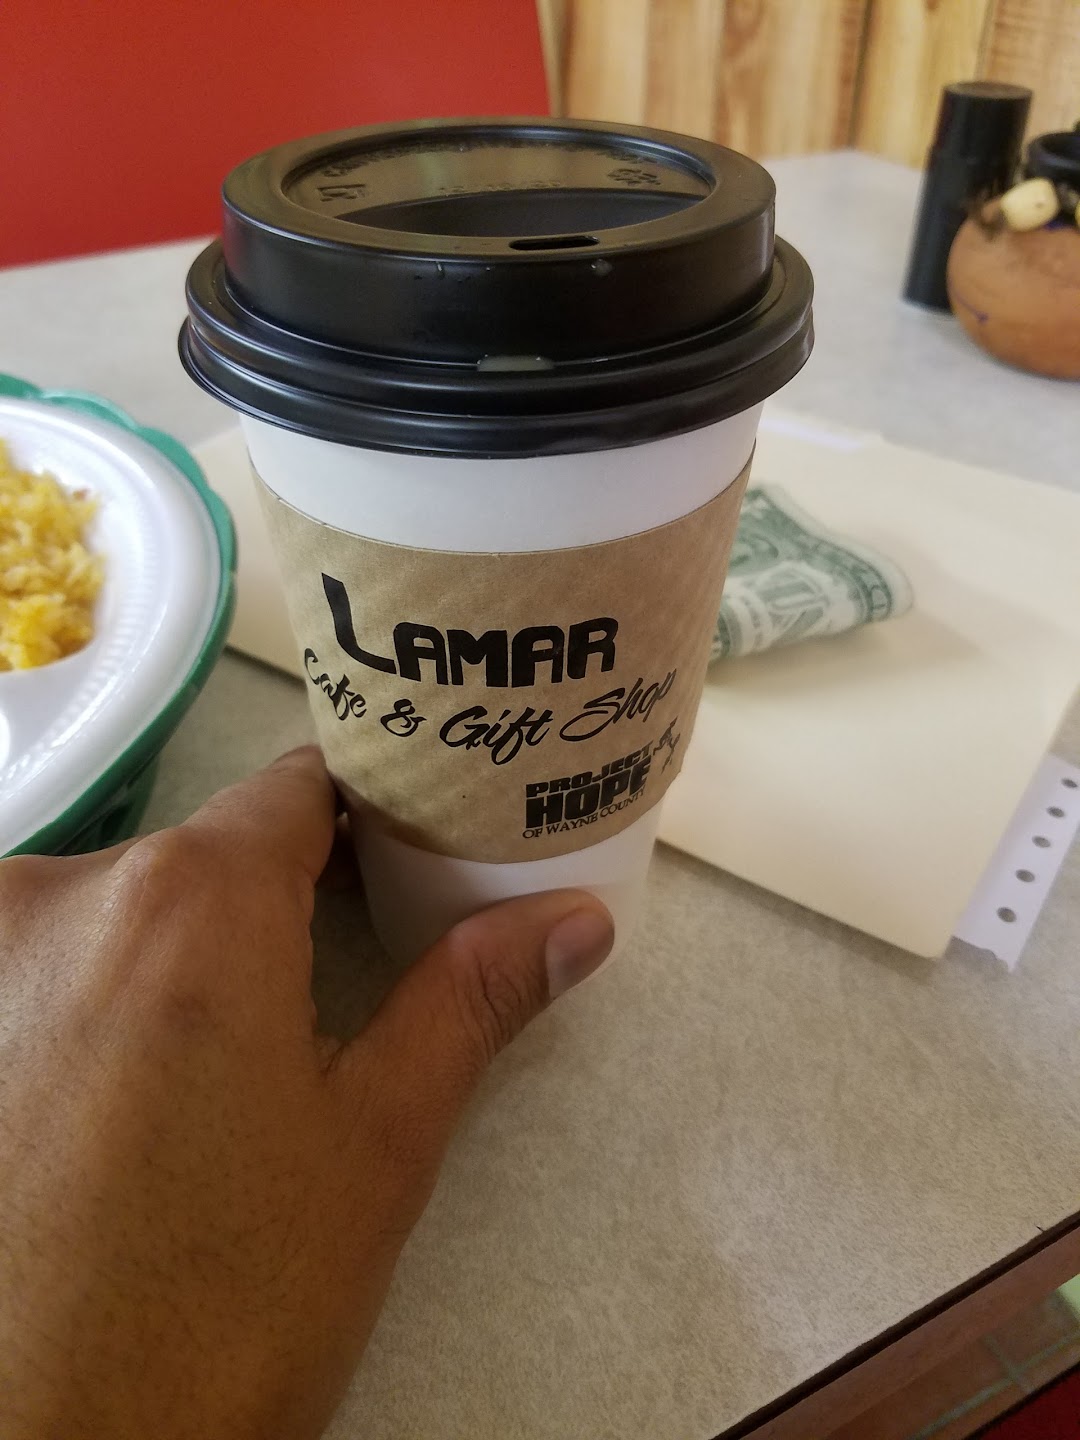 Lamar Mexican Restaurant